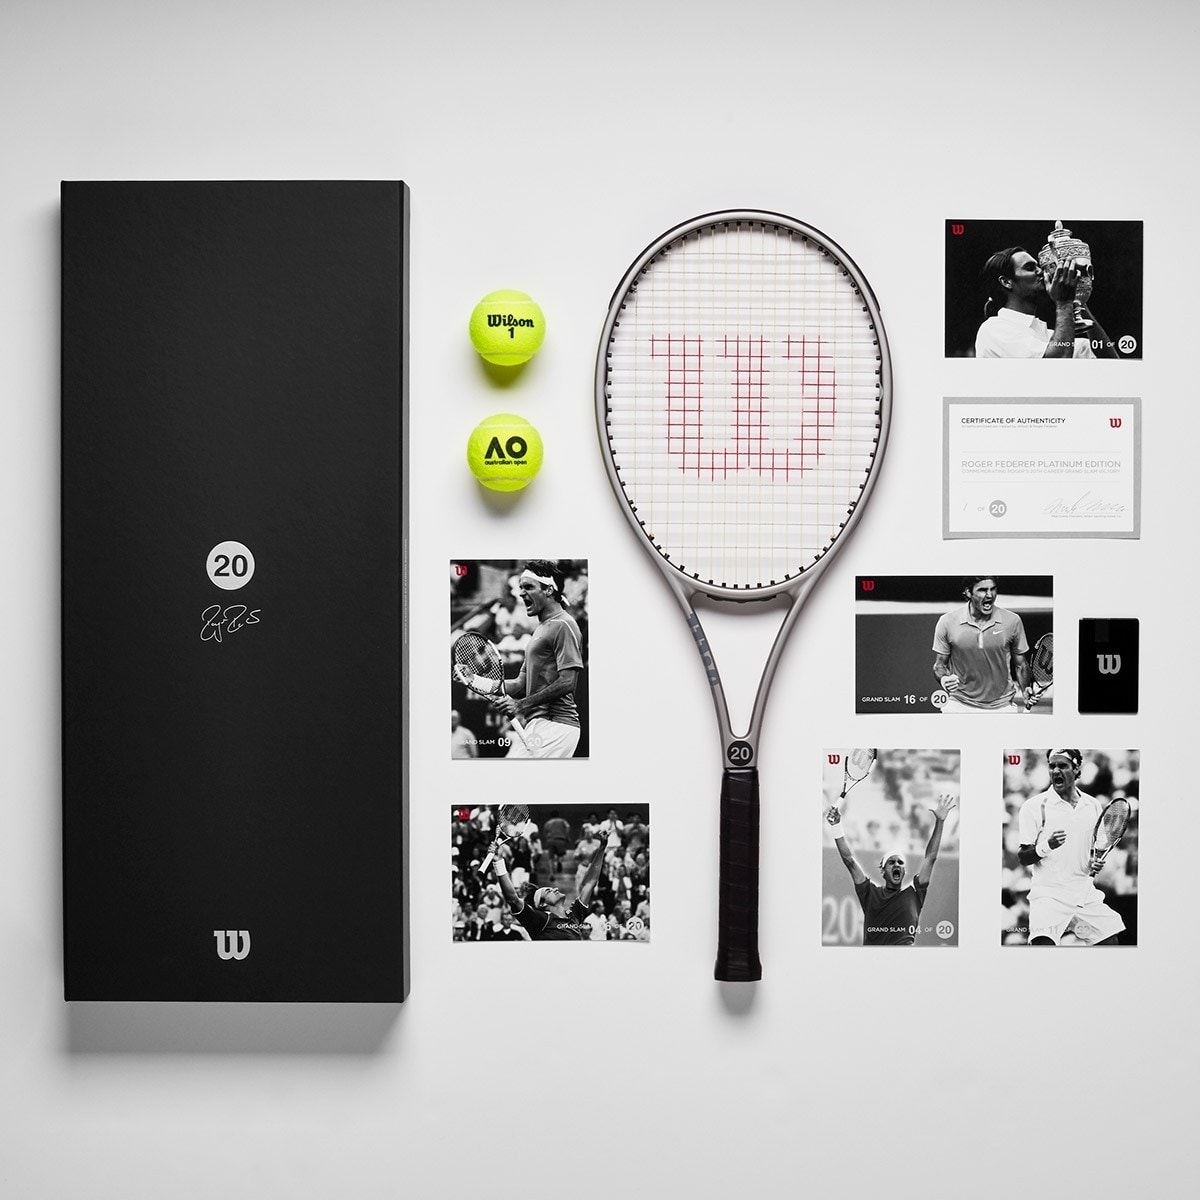 Wilson 為 Roger Federer 推出售價 $20,006 美元的限定網球拍套裝